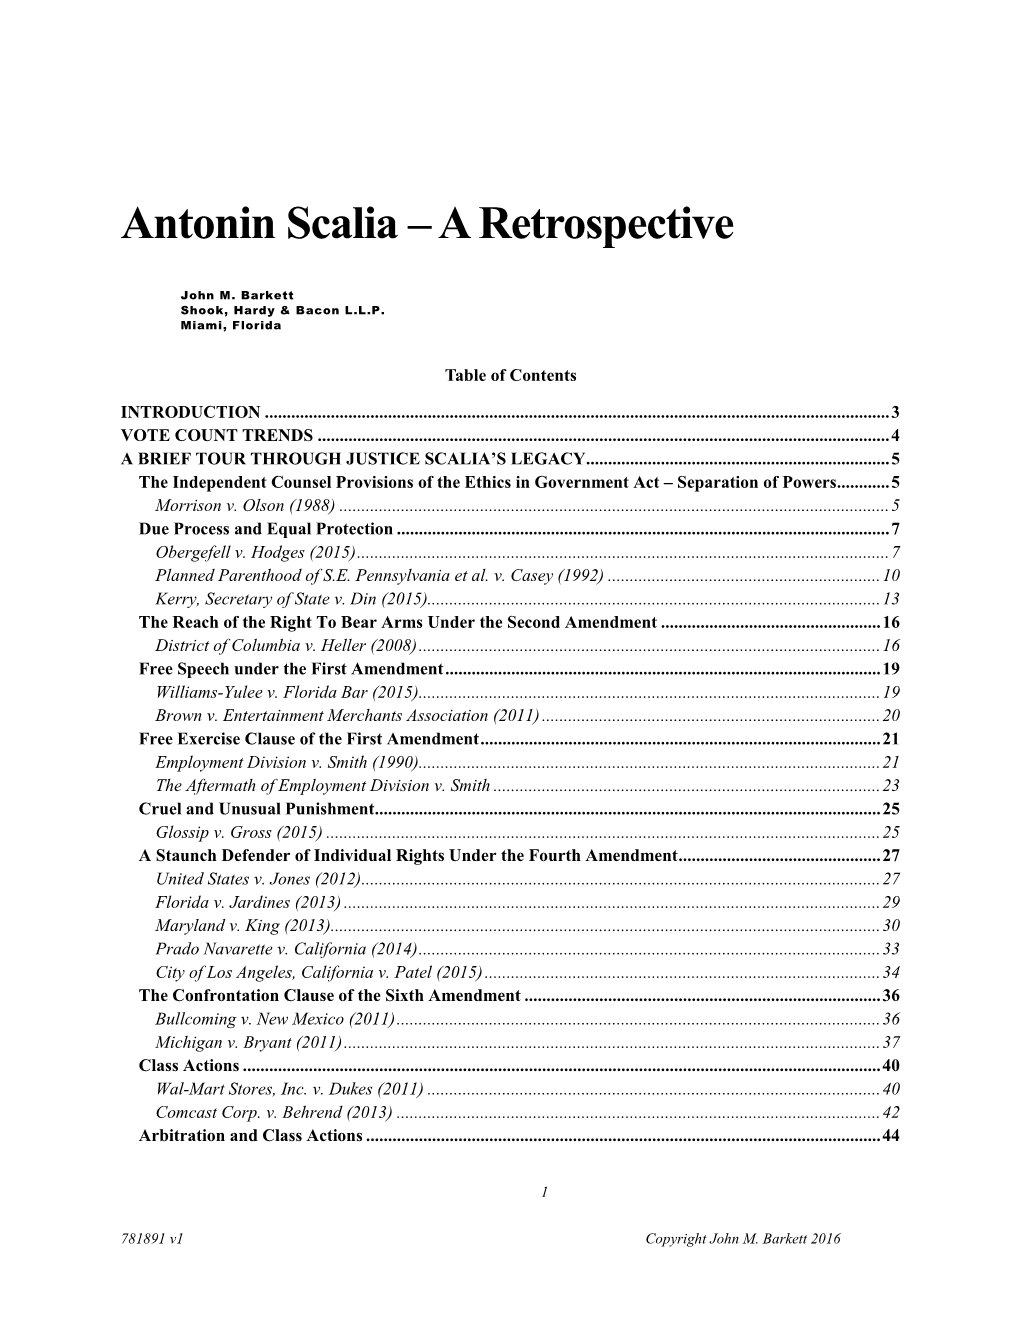 Antonin Scalia – a Retrospective